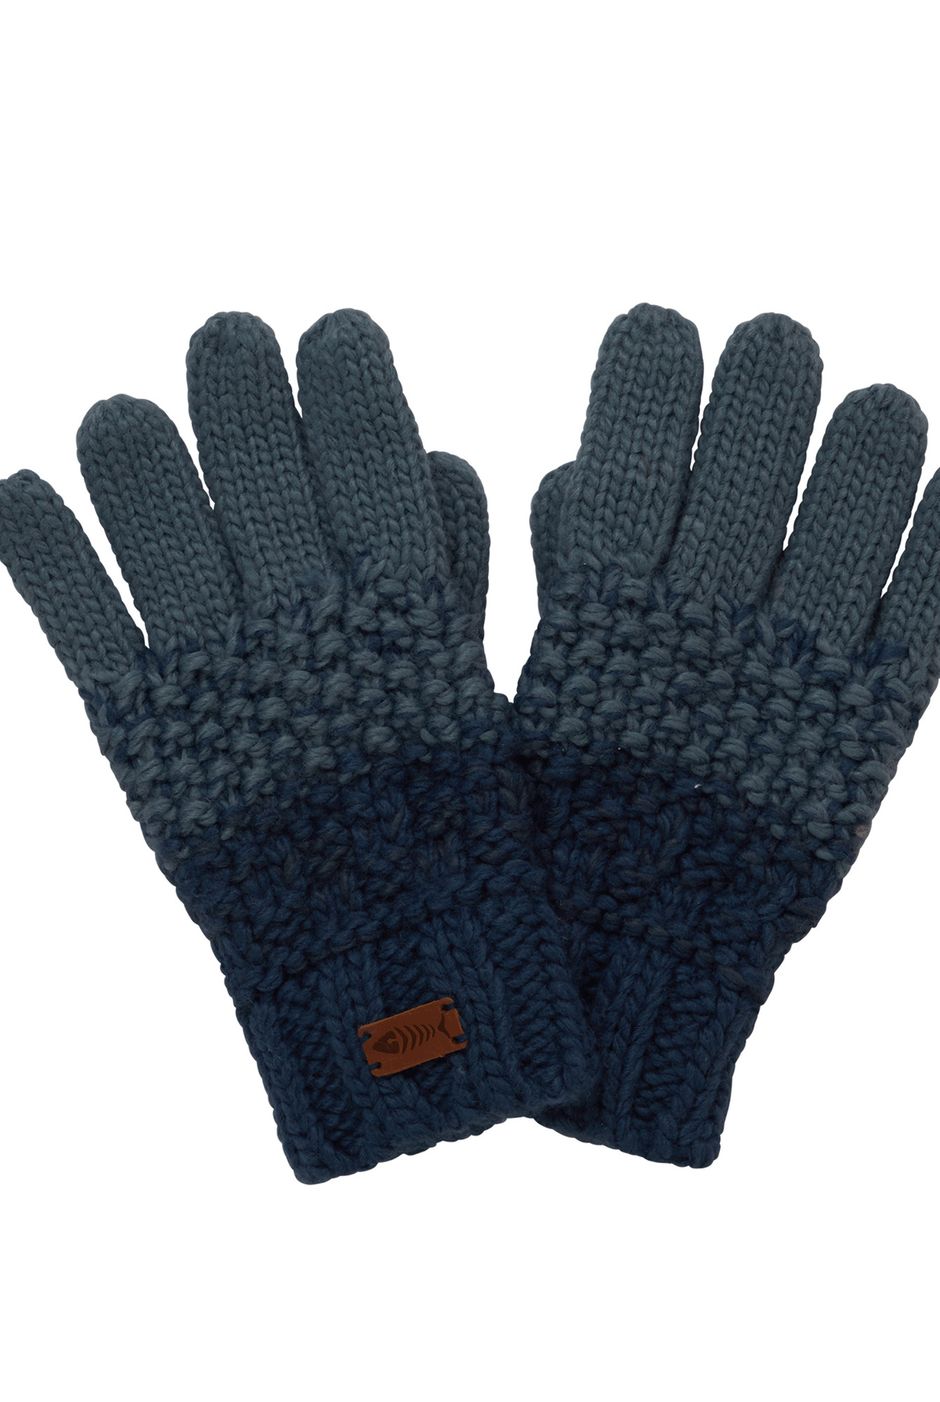 Innis Knit Gloves Navy